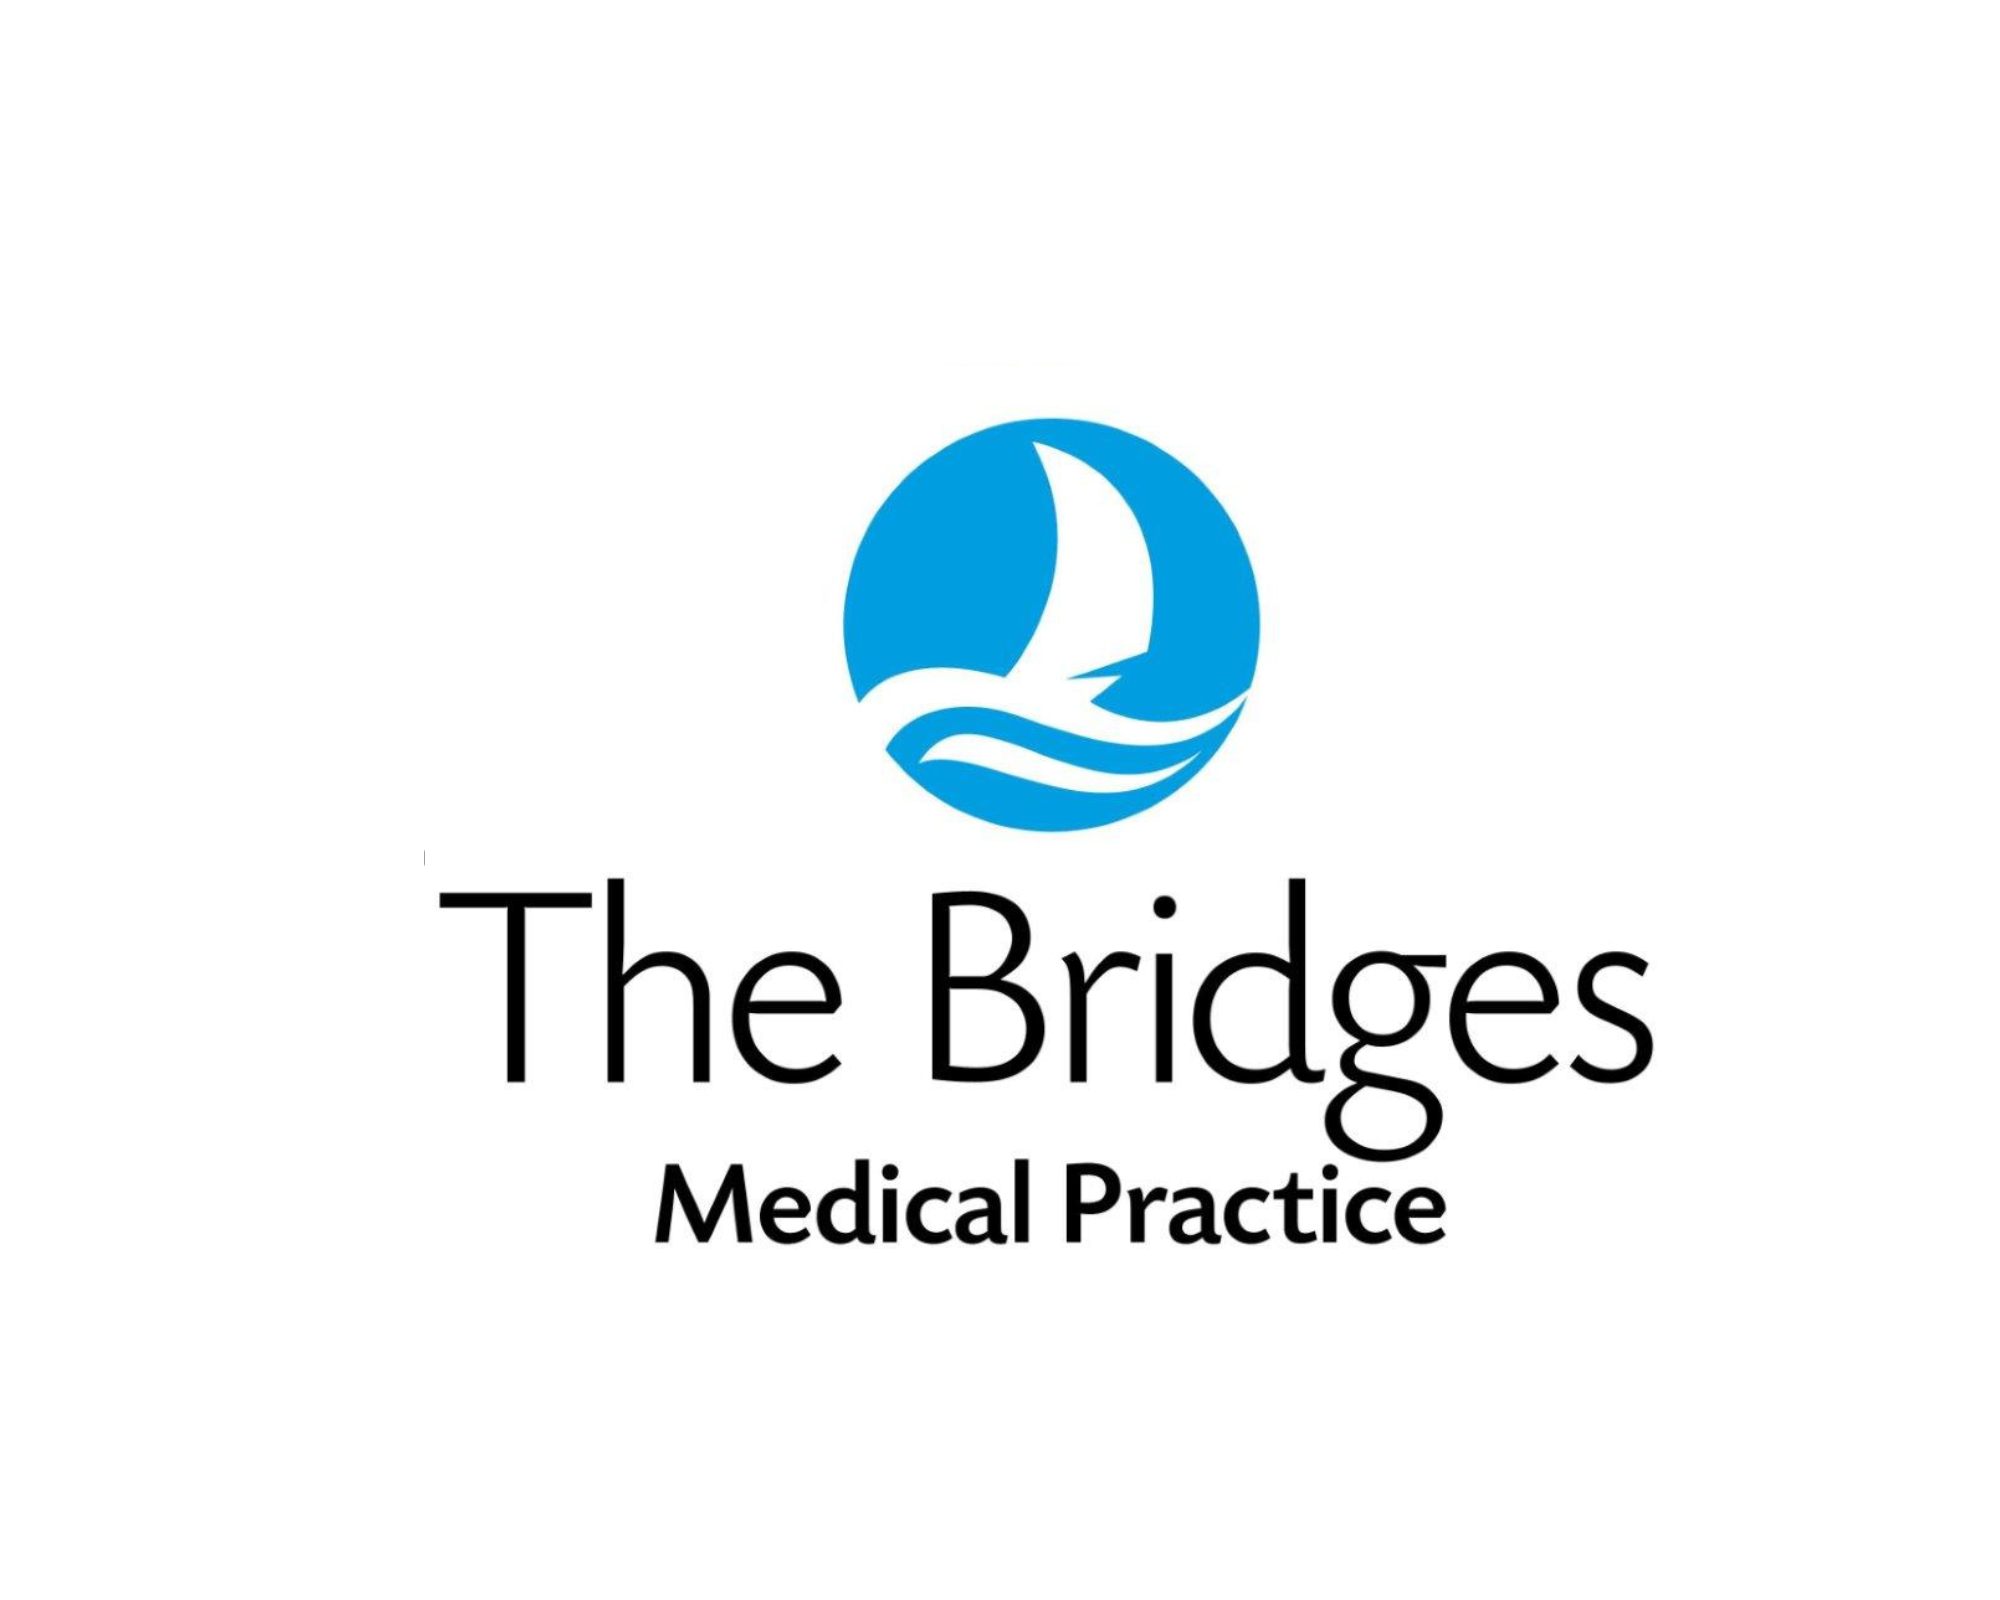 The bridges logo